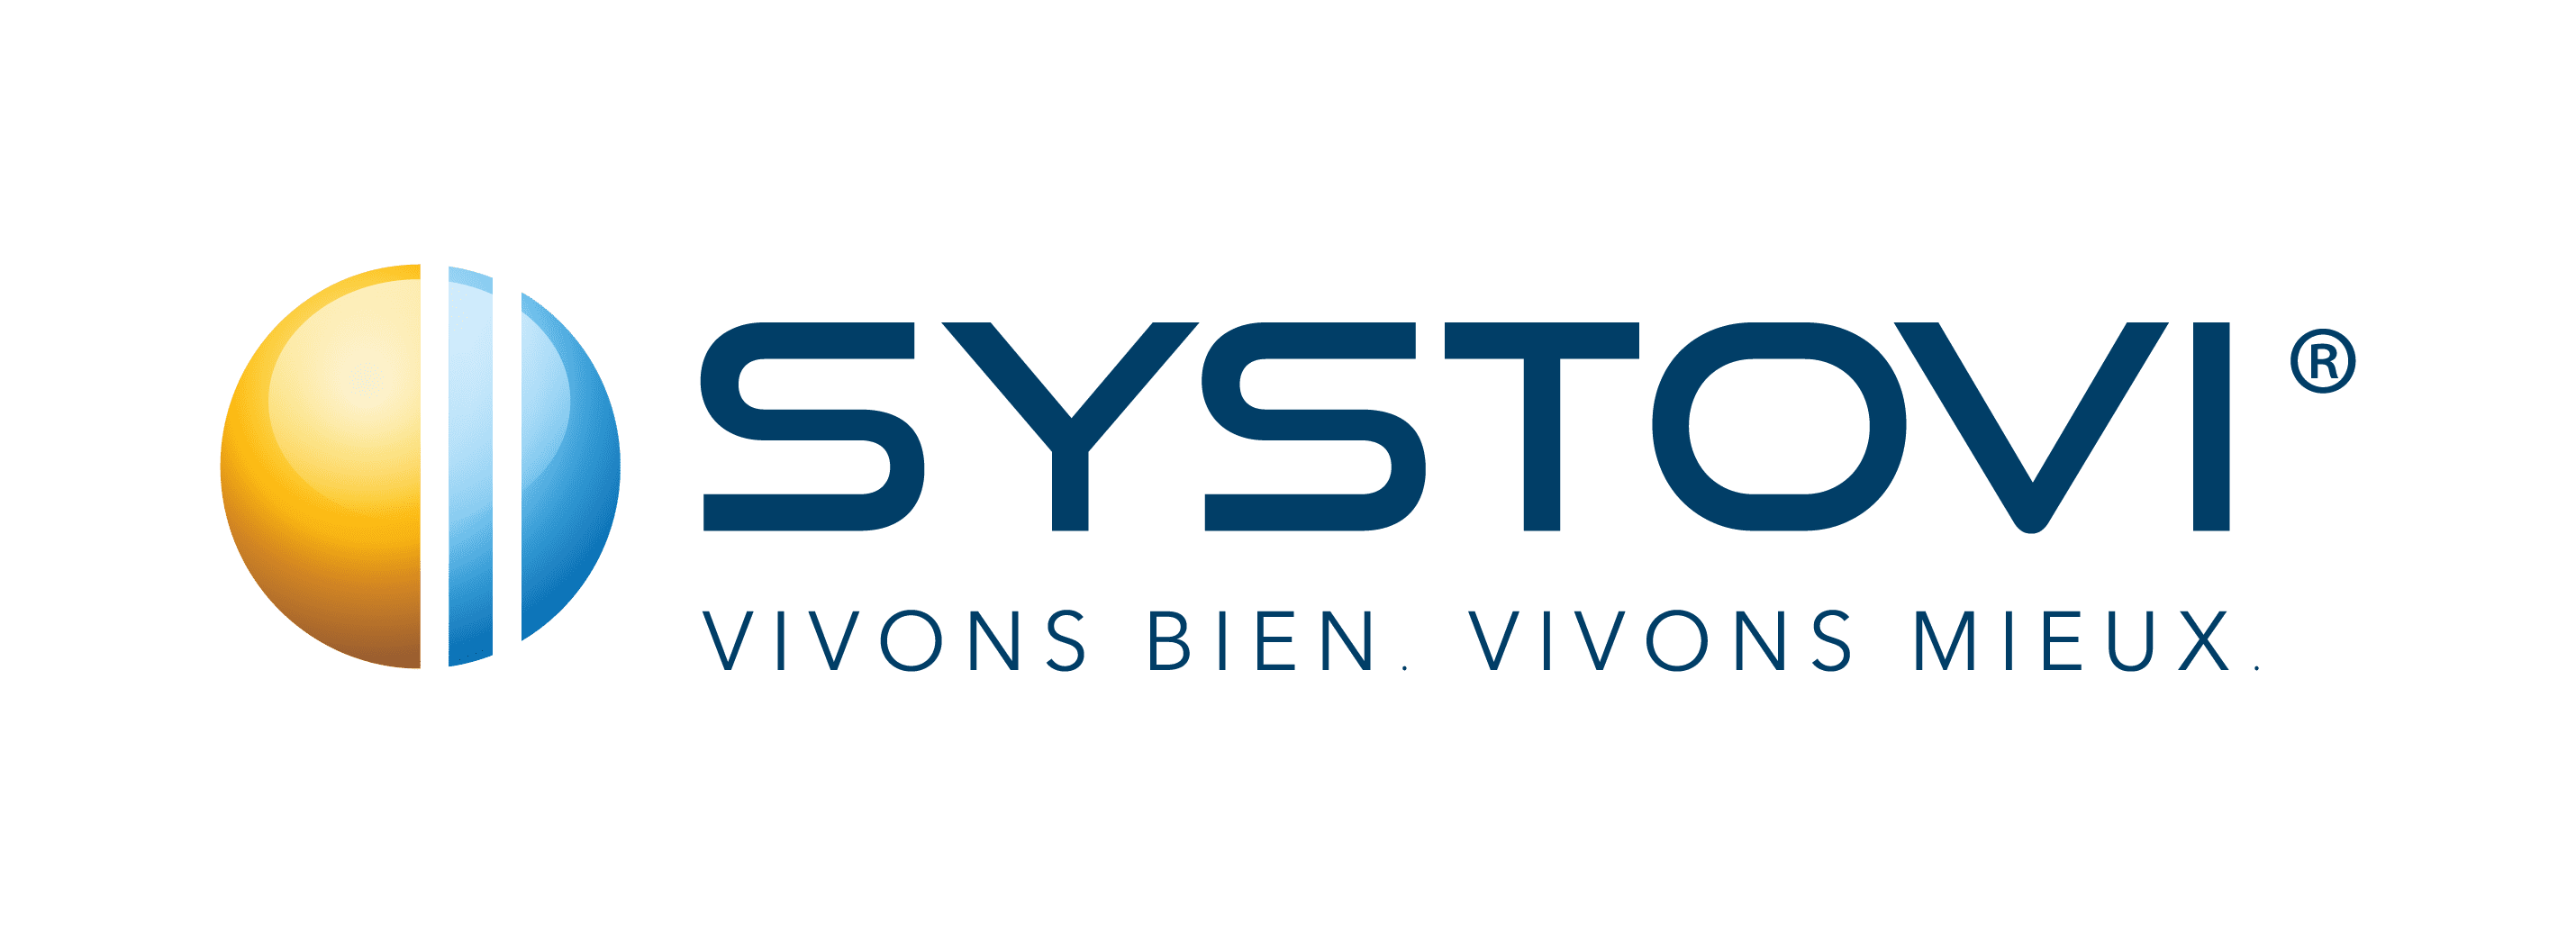 SYSTOVI_logo_avec_baseline_bleu